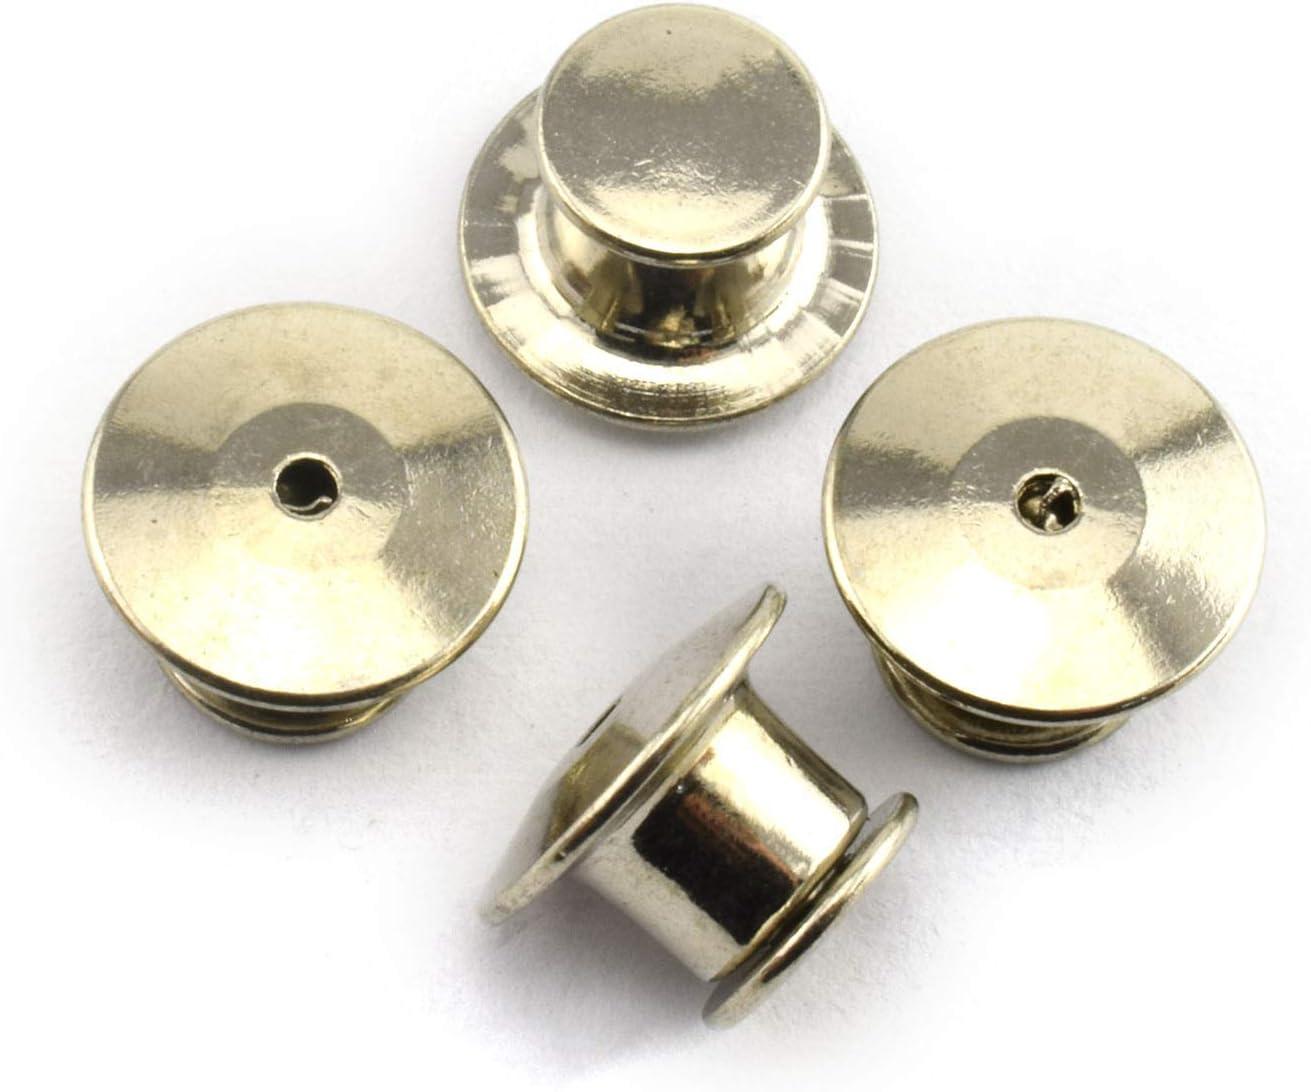 Locking Flathead Pin Clutch backs, Pin Clasps